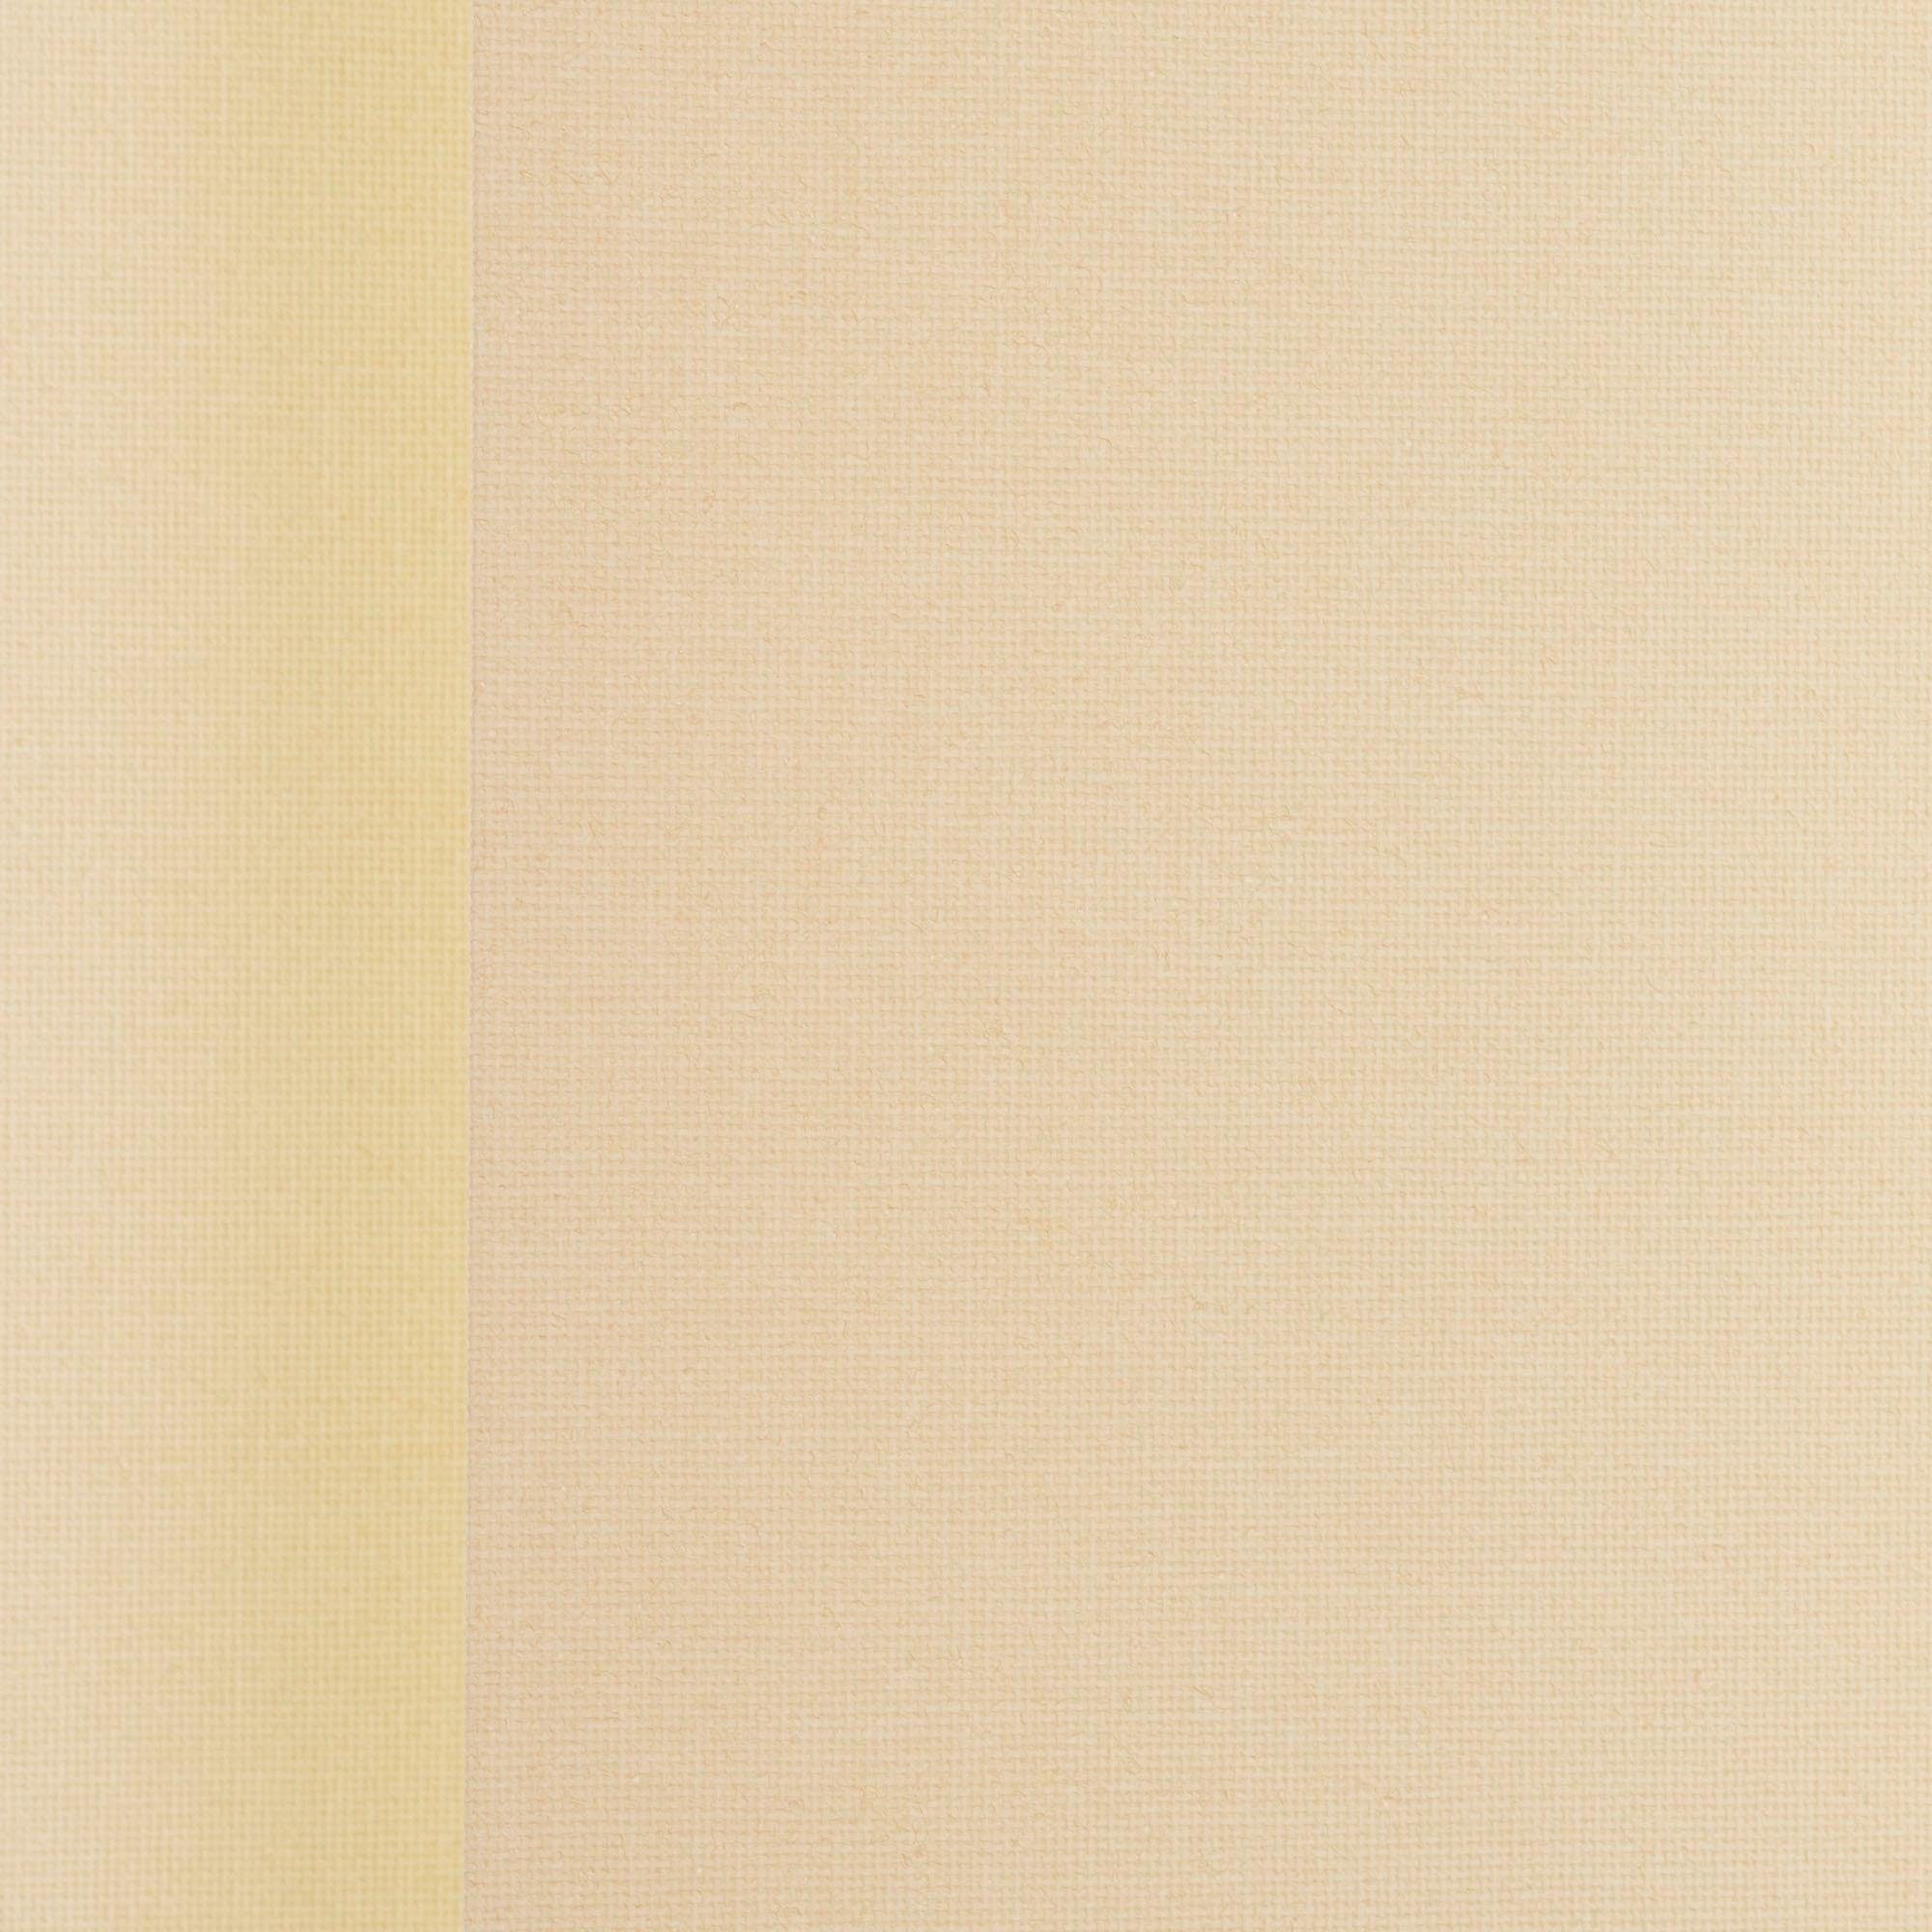 Lamellenvorhang Lamellenvorhang Vertikalanlage perlex beige Vertikalanlage mm freihängend, Kürzbare - Perlex Lamelle, Liedeco, 127